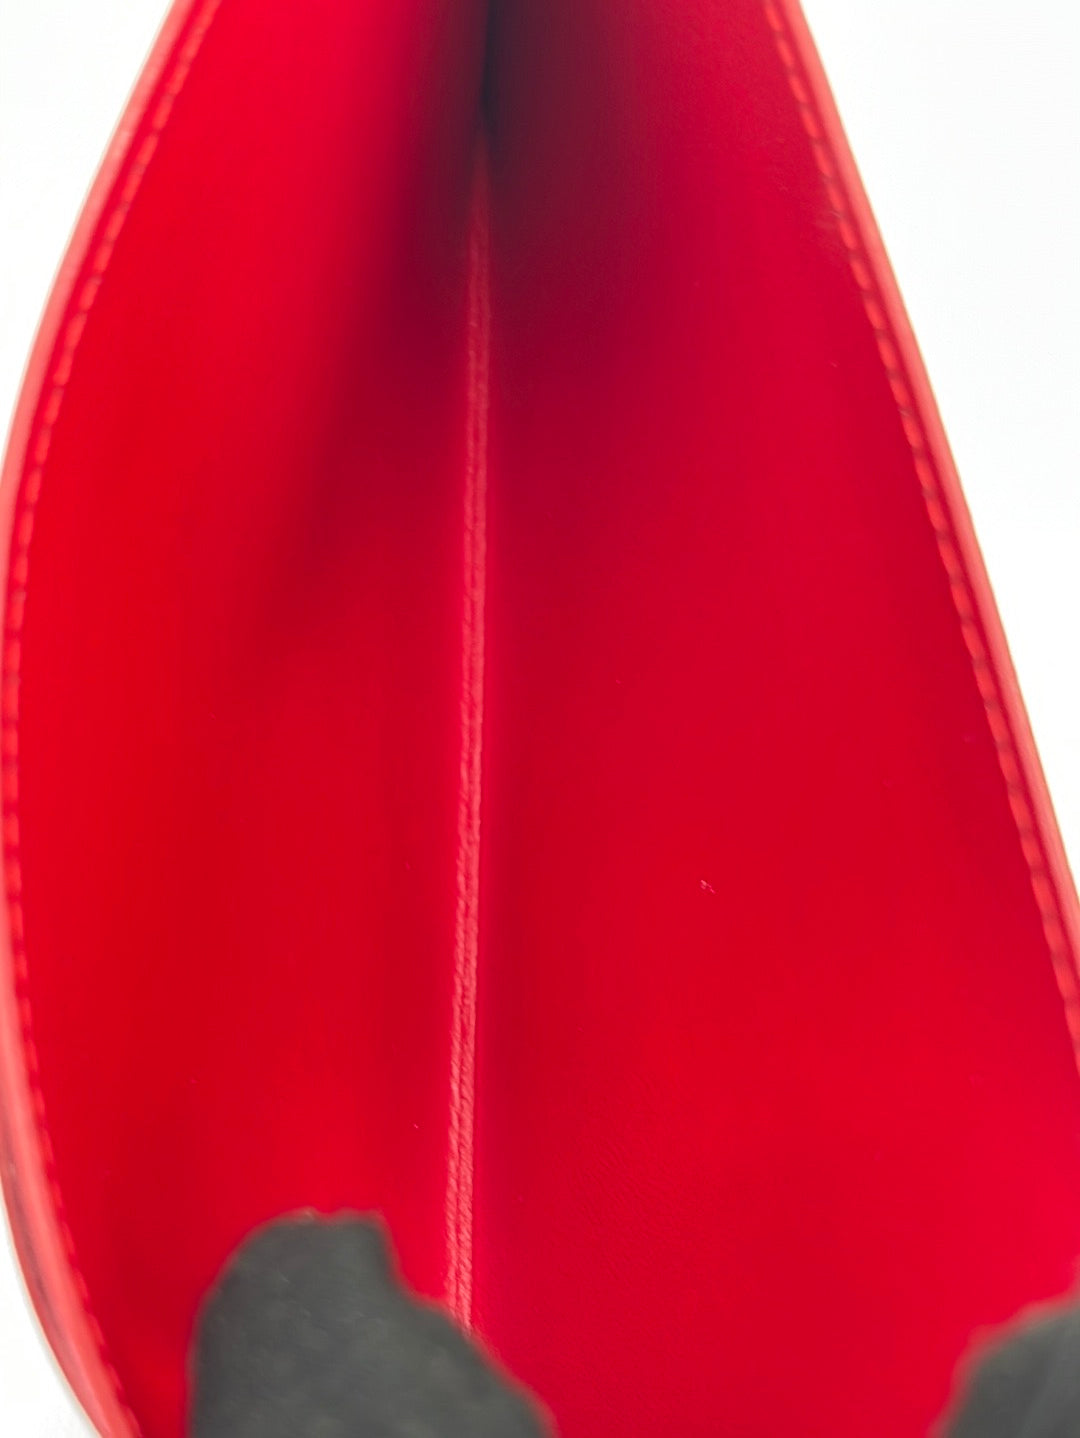 Preloved Louis Vuitton Red Vernis Felicie Inserts - 2 Inserts - G9YDQVJ/KX8HRB8 032224 P